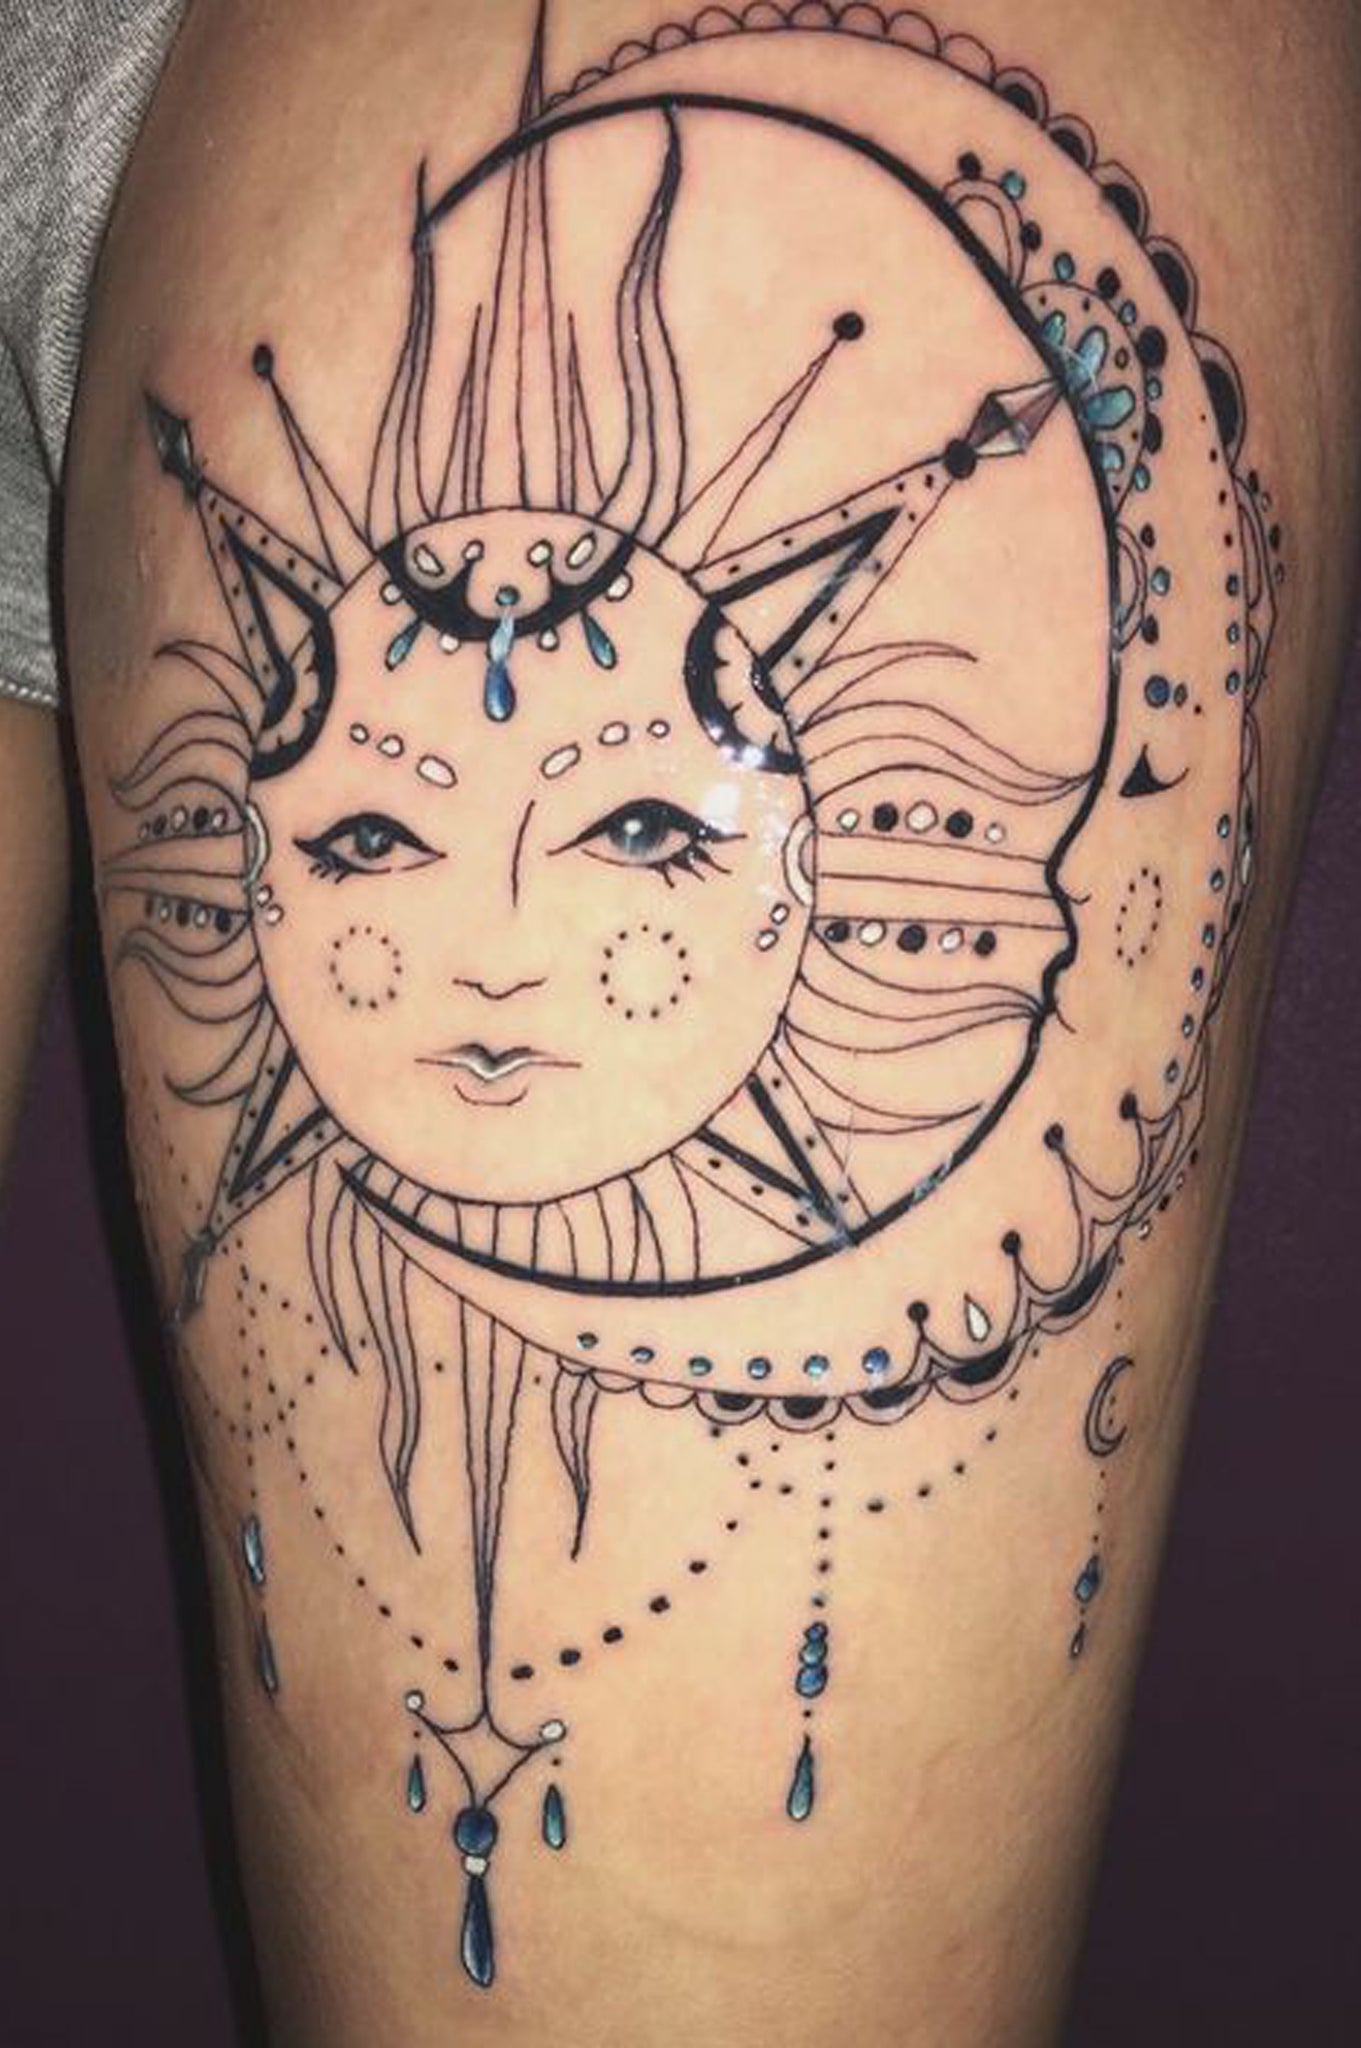 Sun & Moon Thigh Tattoo Ideas - Side Nature Leg Tat -  muslo tatuaje ideas para mujeres - www.MyBodiArt.com #tattoo